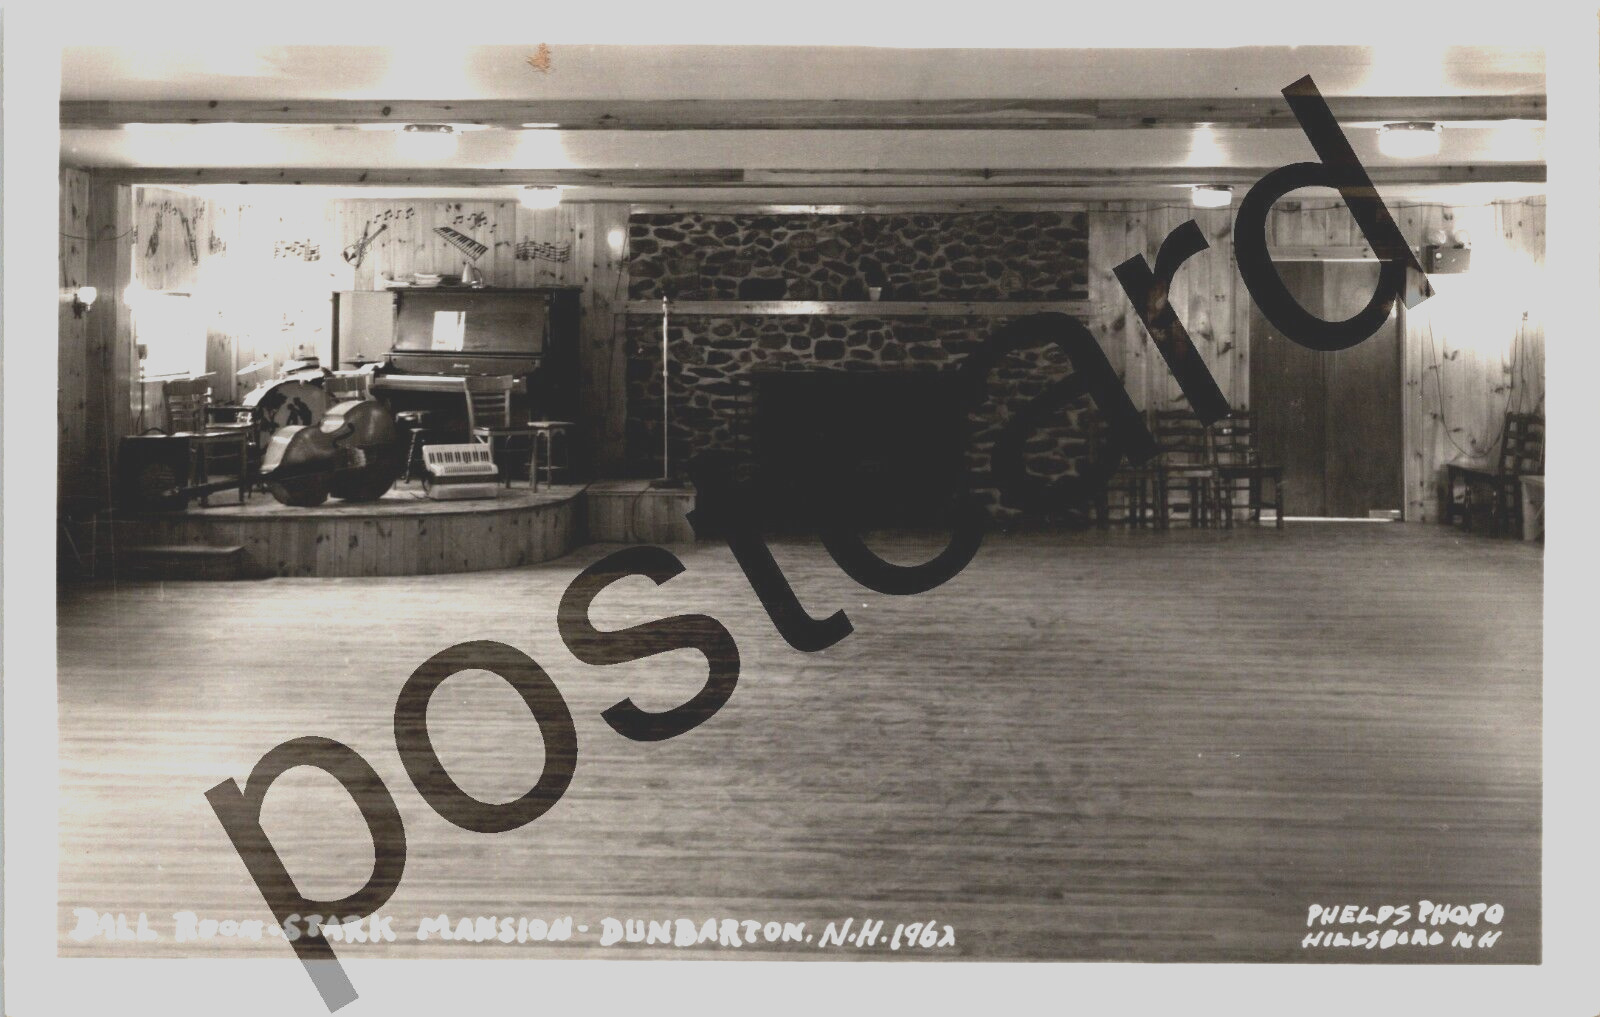 1962 DUNBARTON NH, Ball Room, Stark Mansion, Phelps Photo RPPC postcard jj284